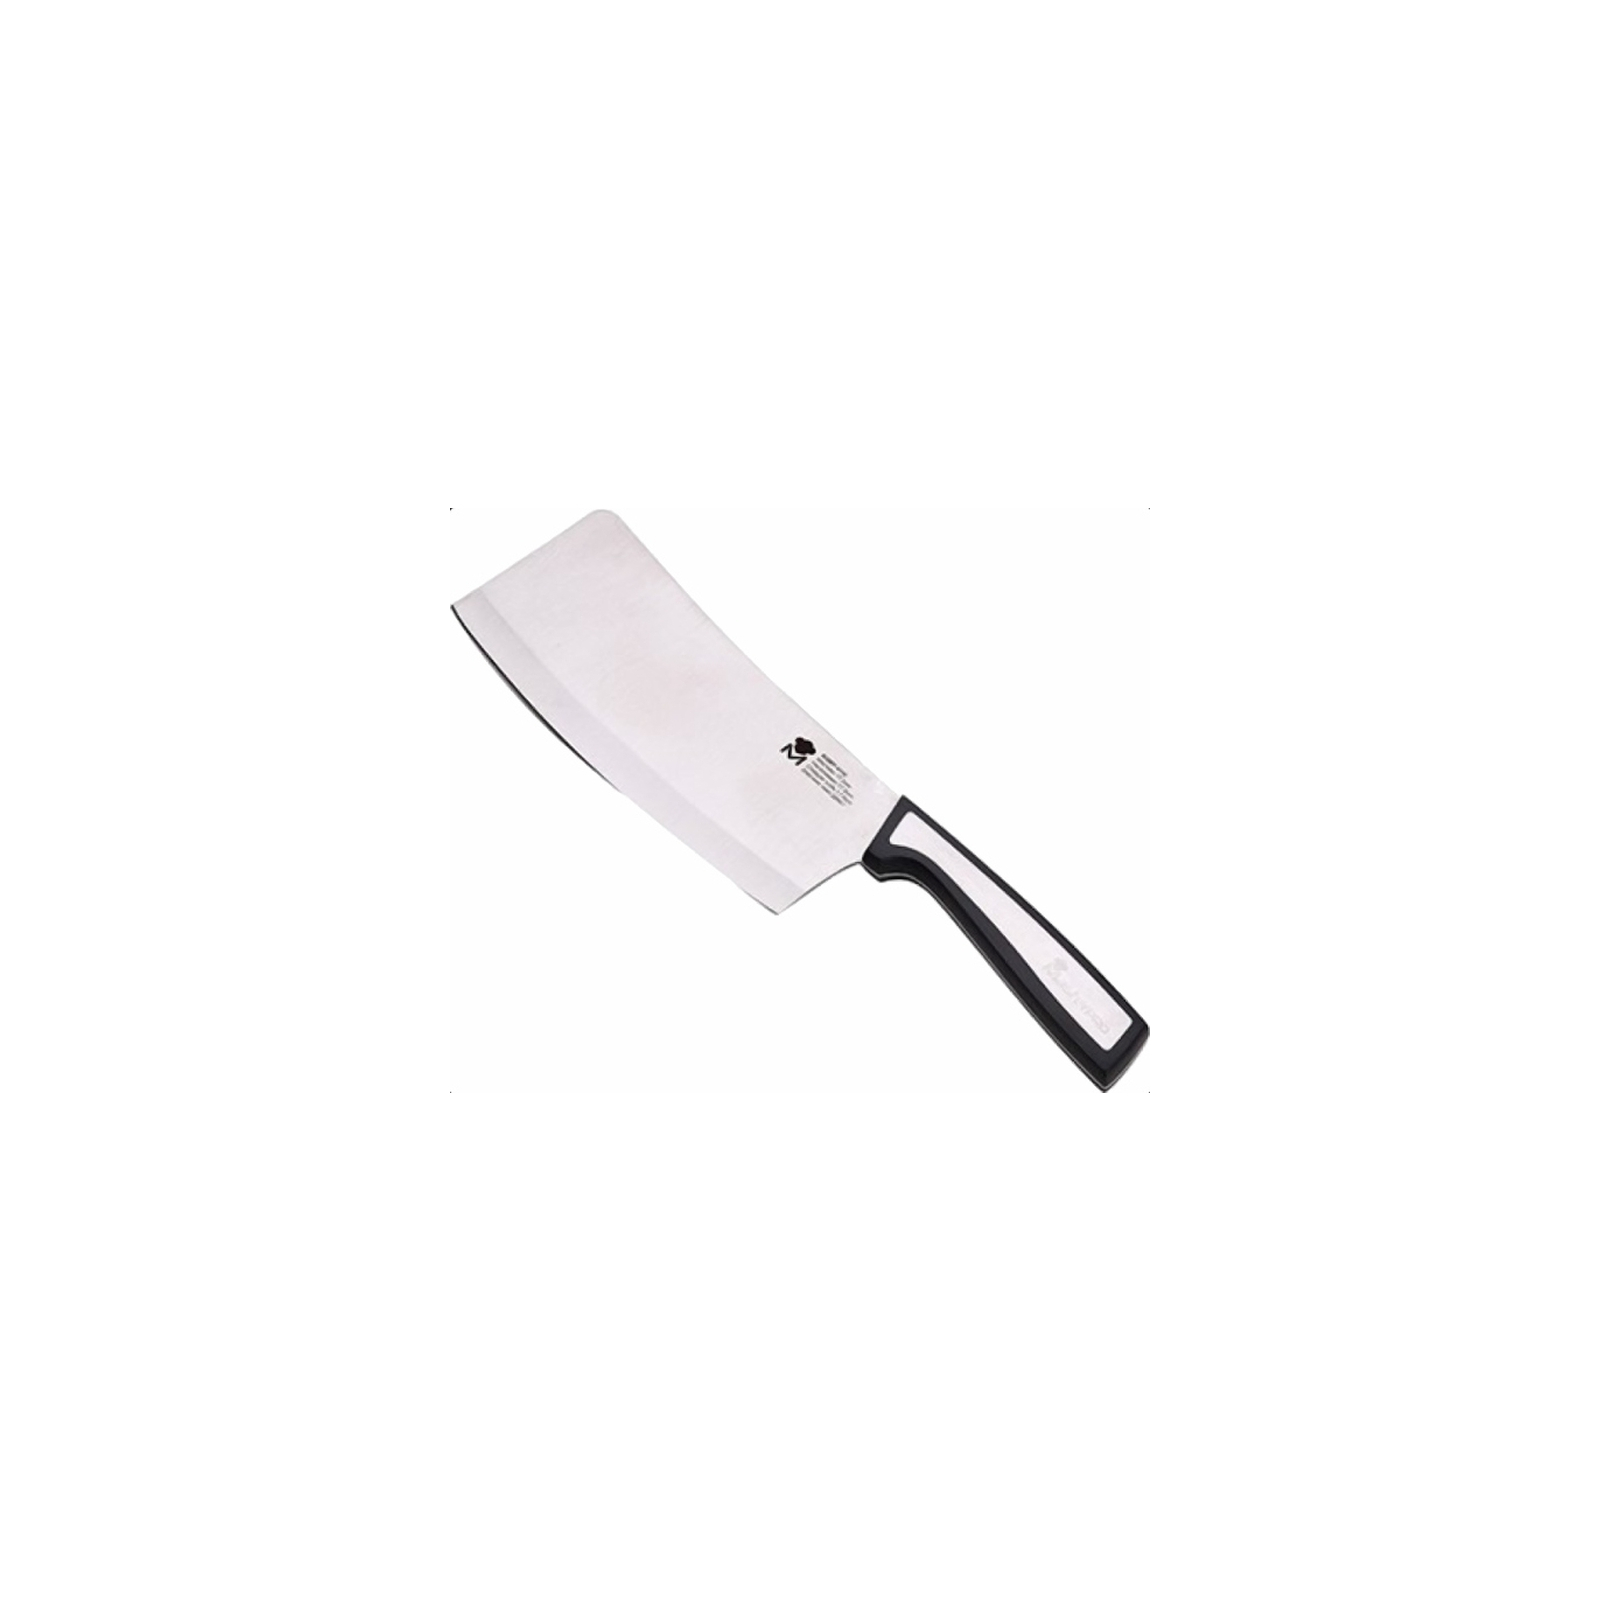 Кухонный нож MasterPro Sharp для хліба 20 см (BGMP-4113)